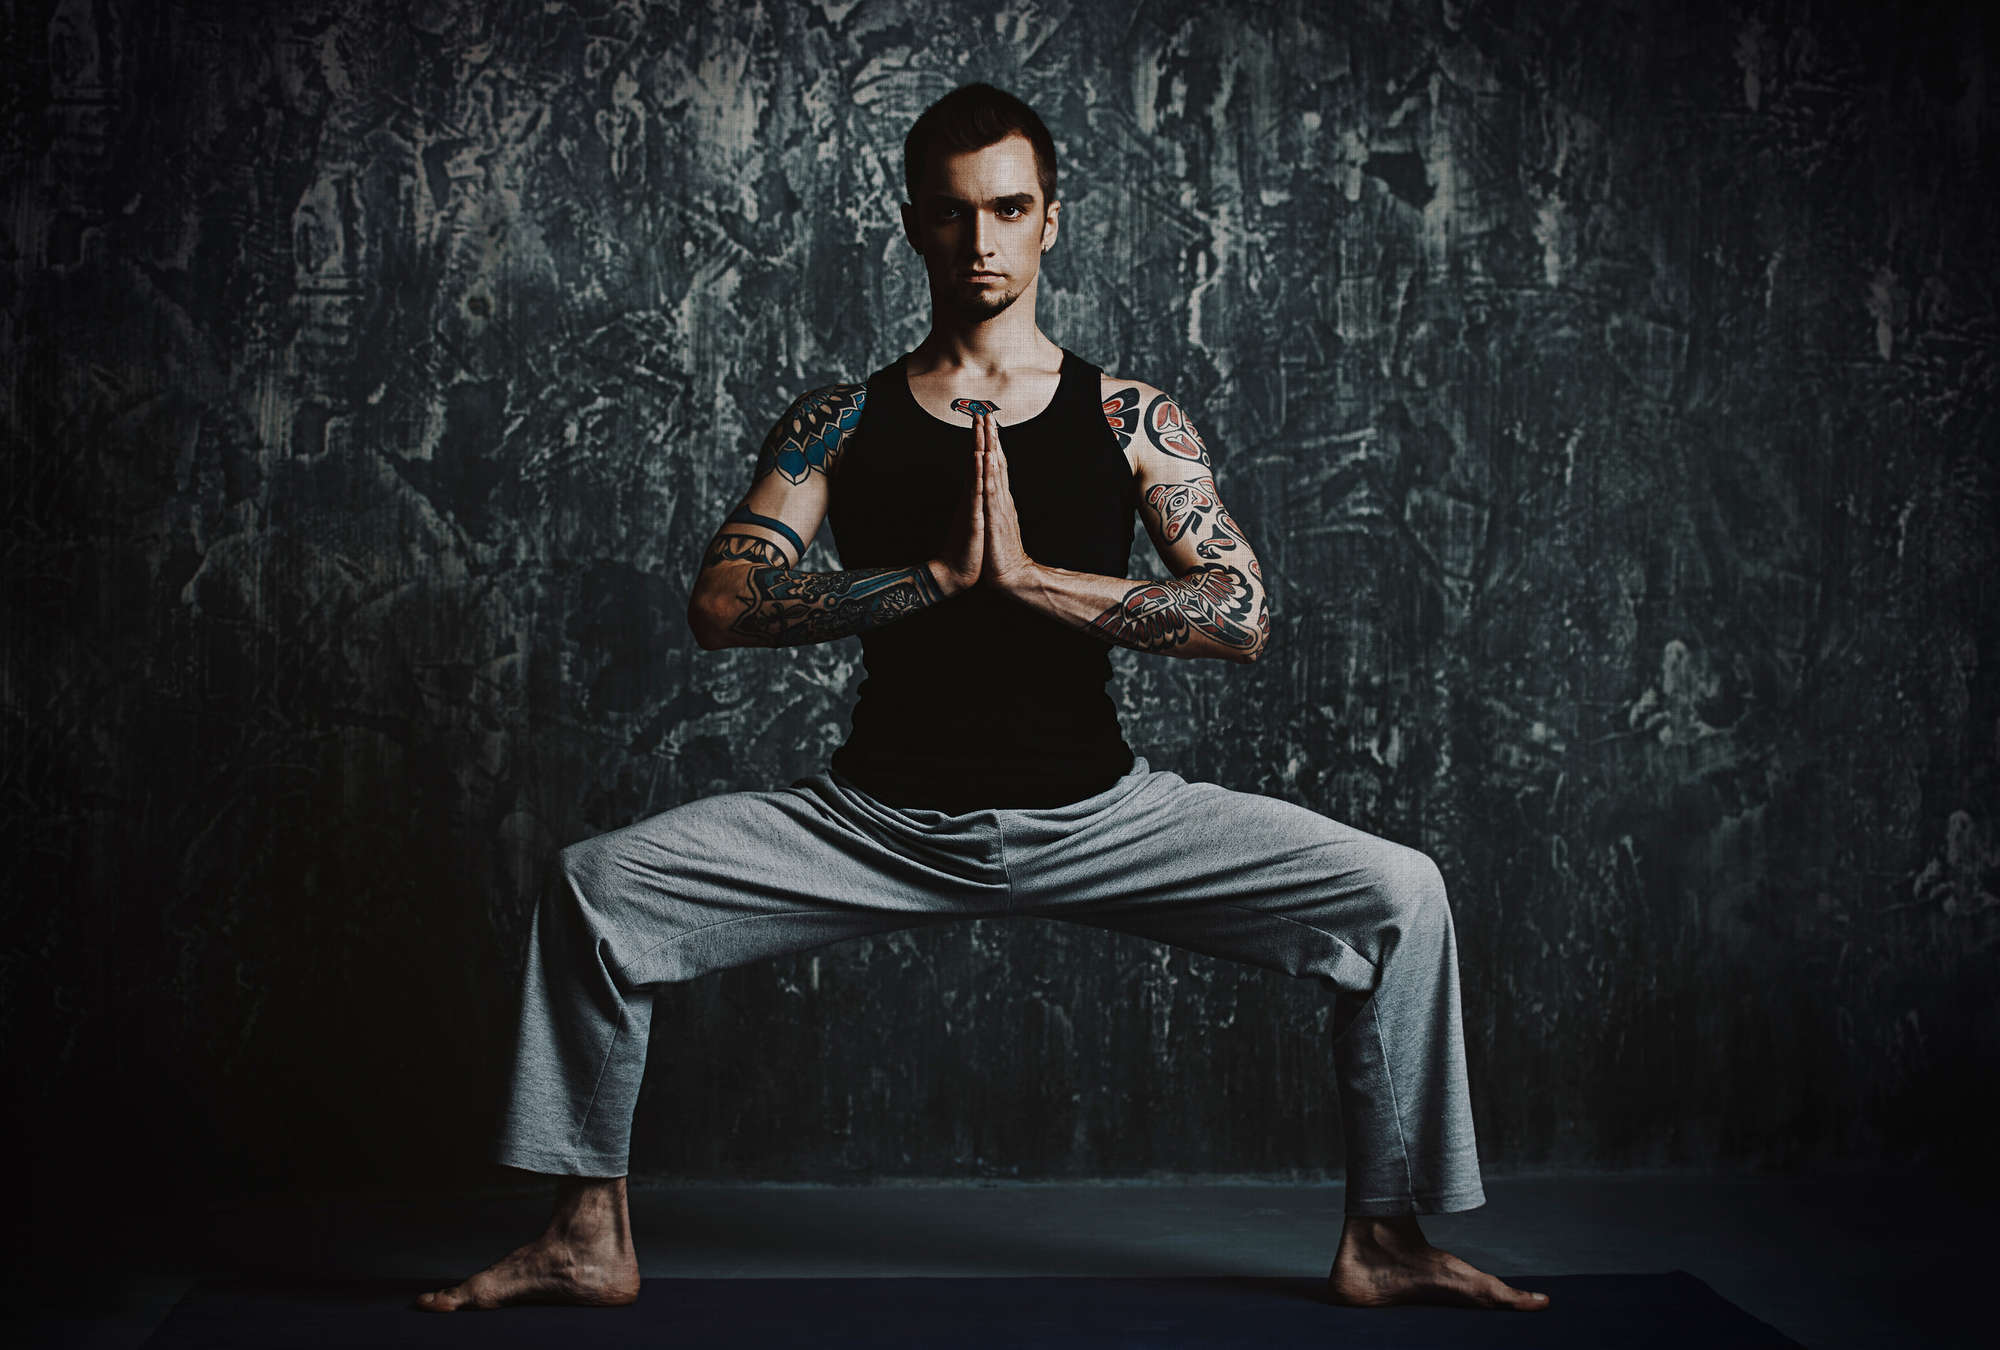             Chandra 1 - Hombre en postura de yoga como fotomural en estructura de lino natural - Azul, Negro | Perla liso no tejido
        